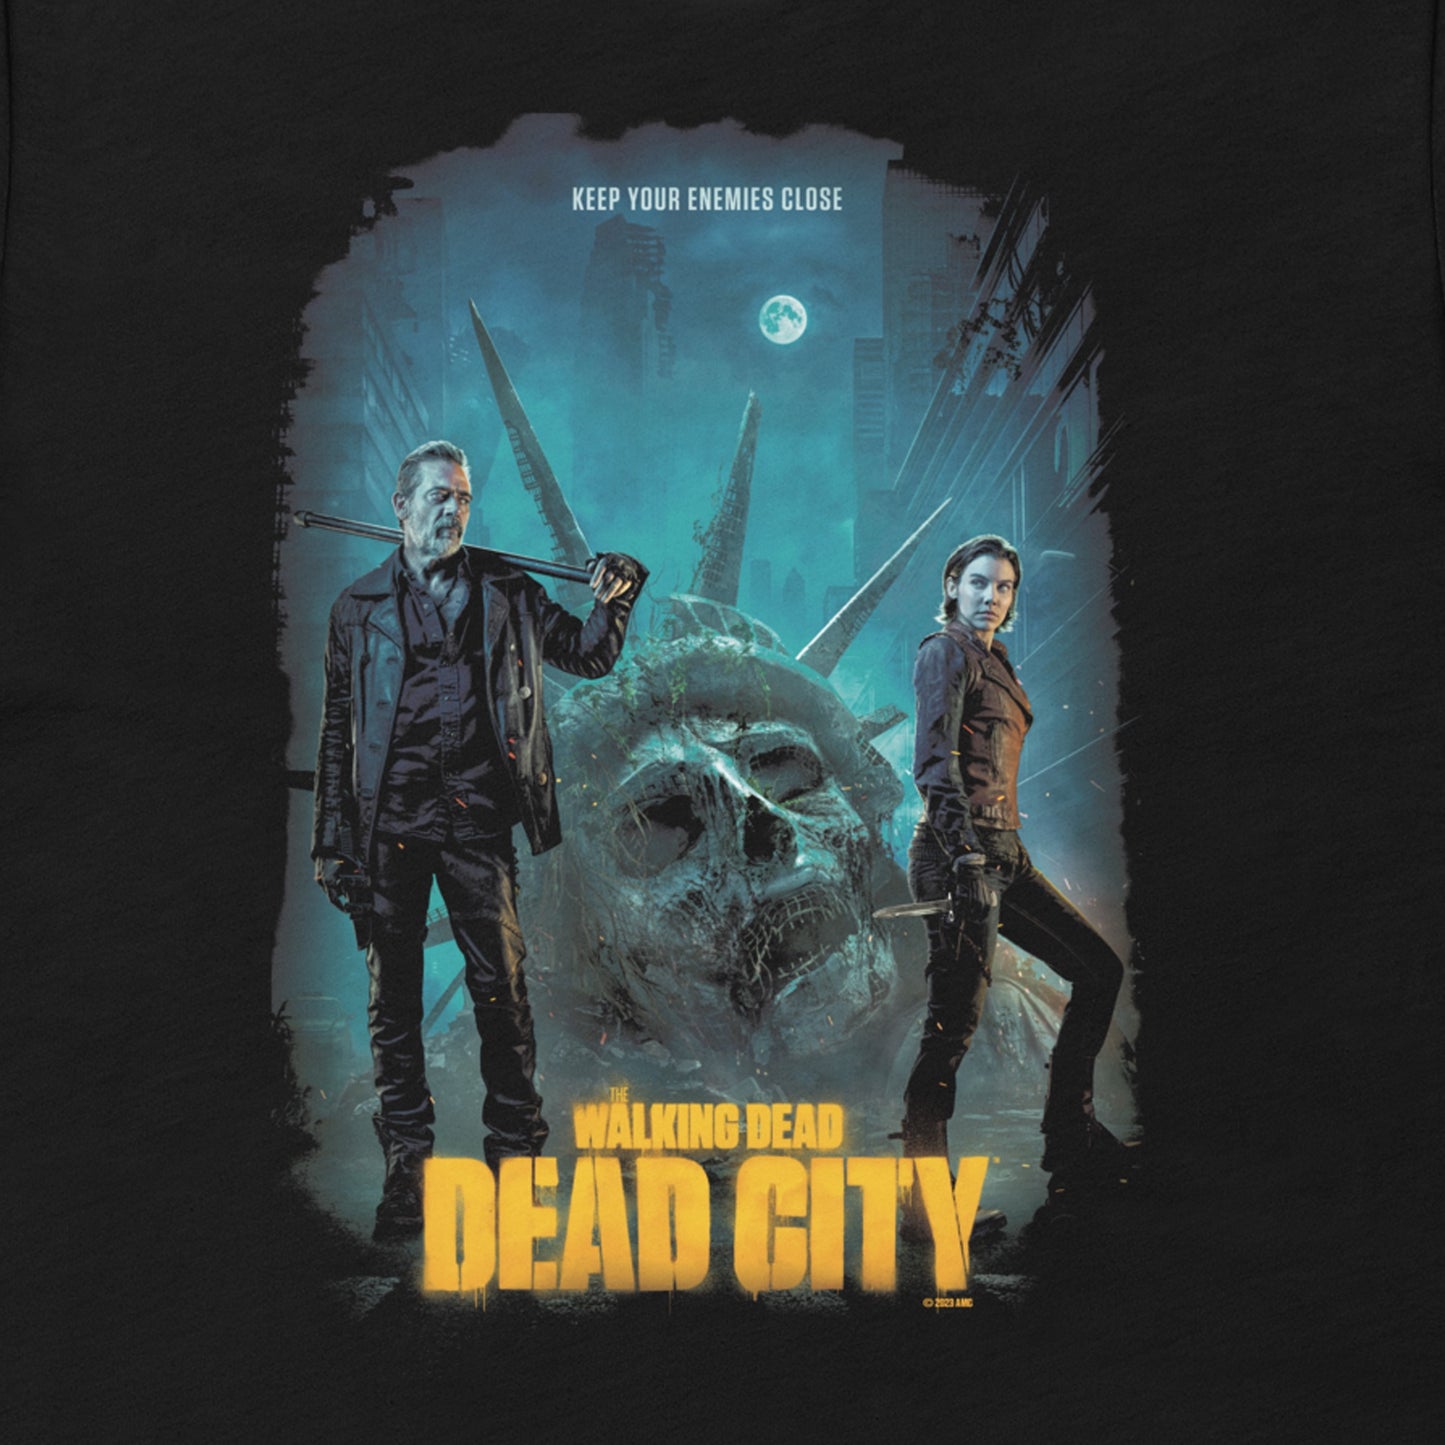 Walking Dead - Negan Poster Print (22 x 34) 